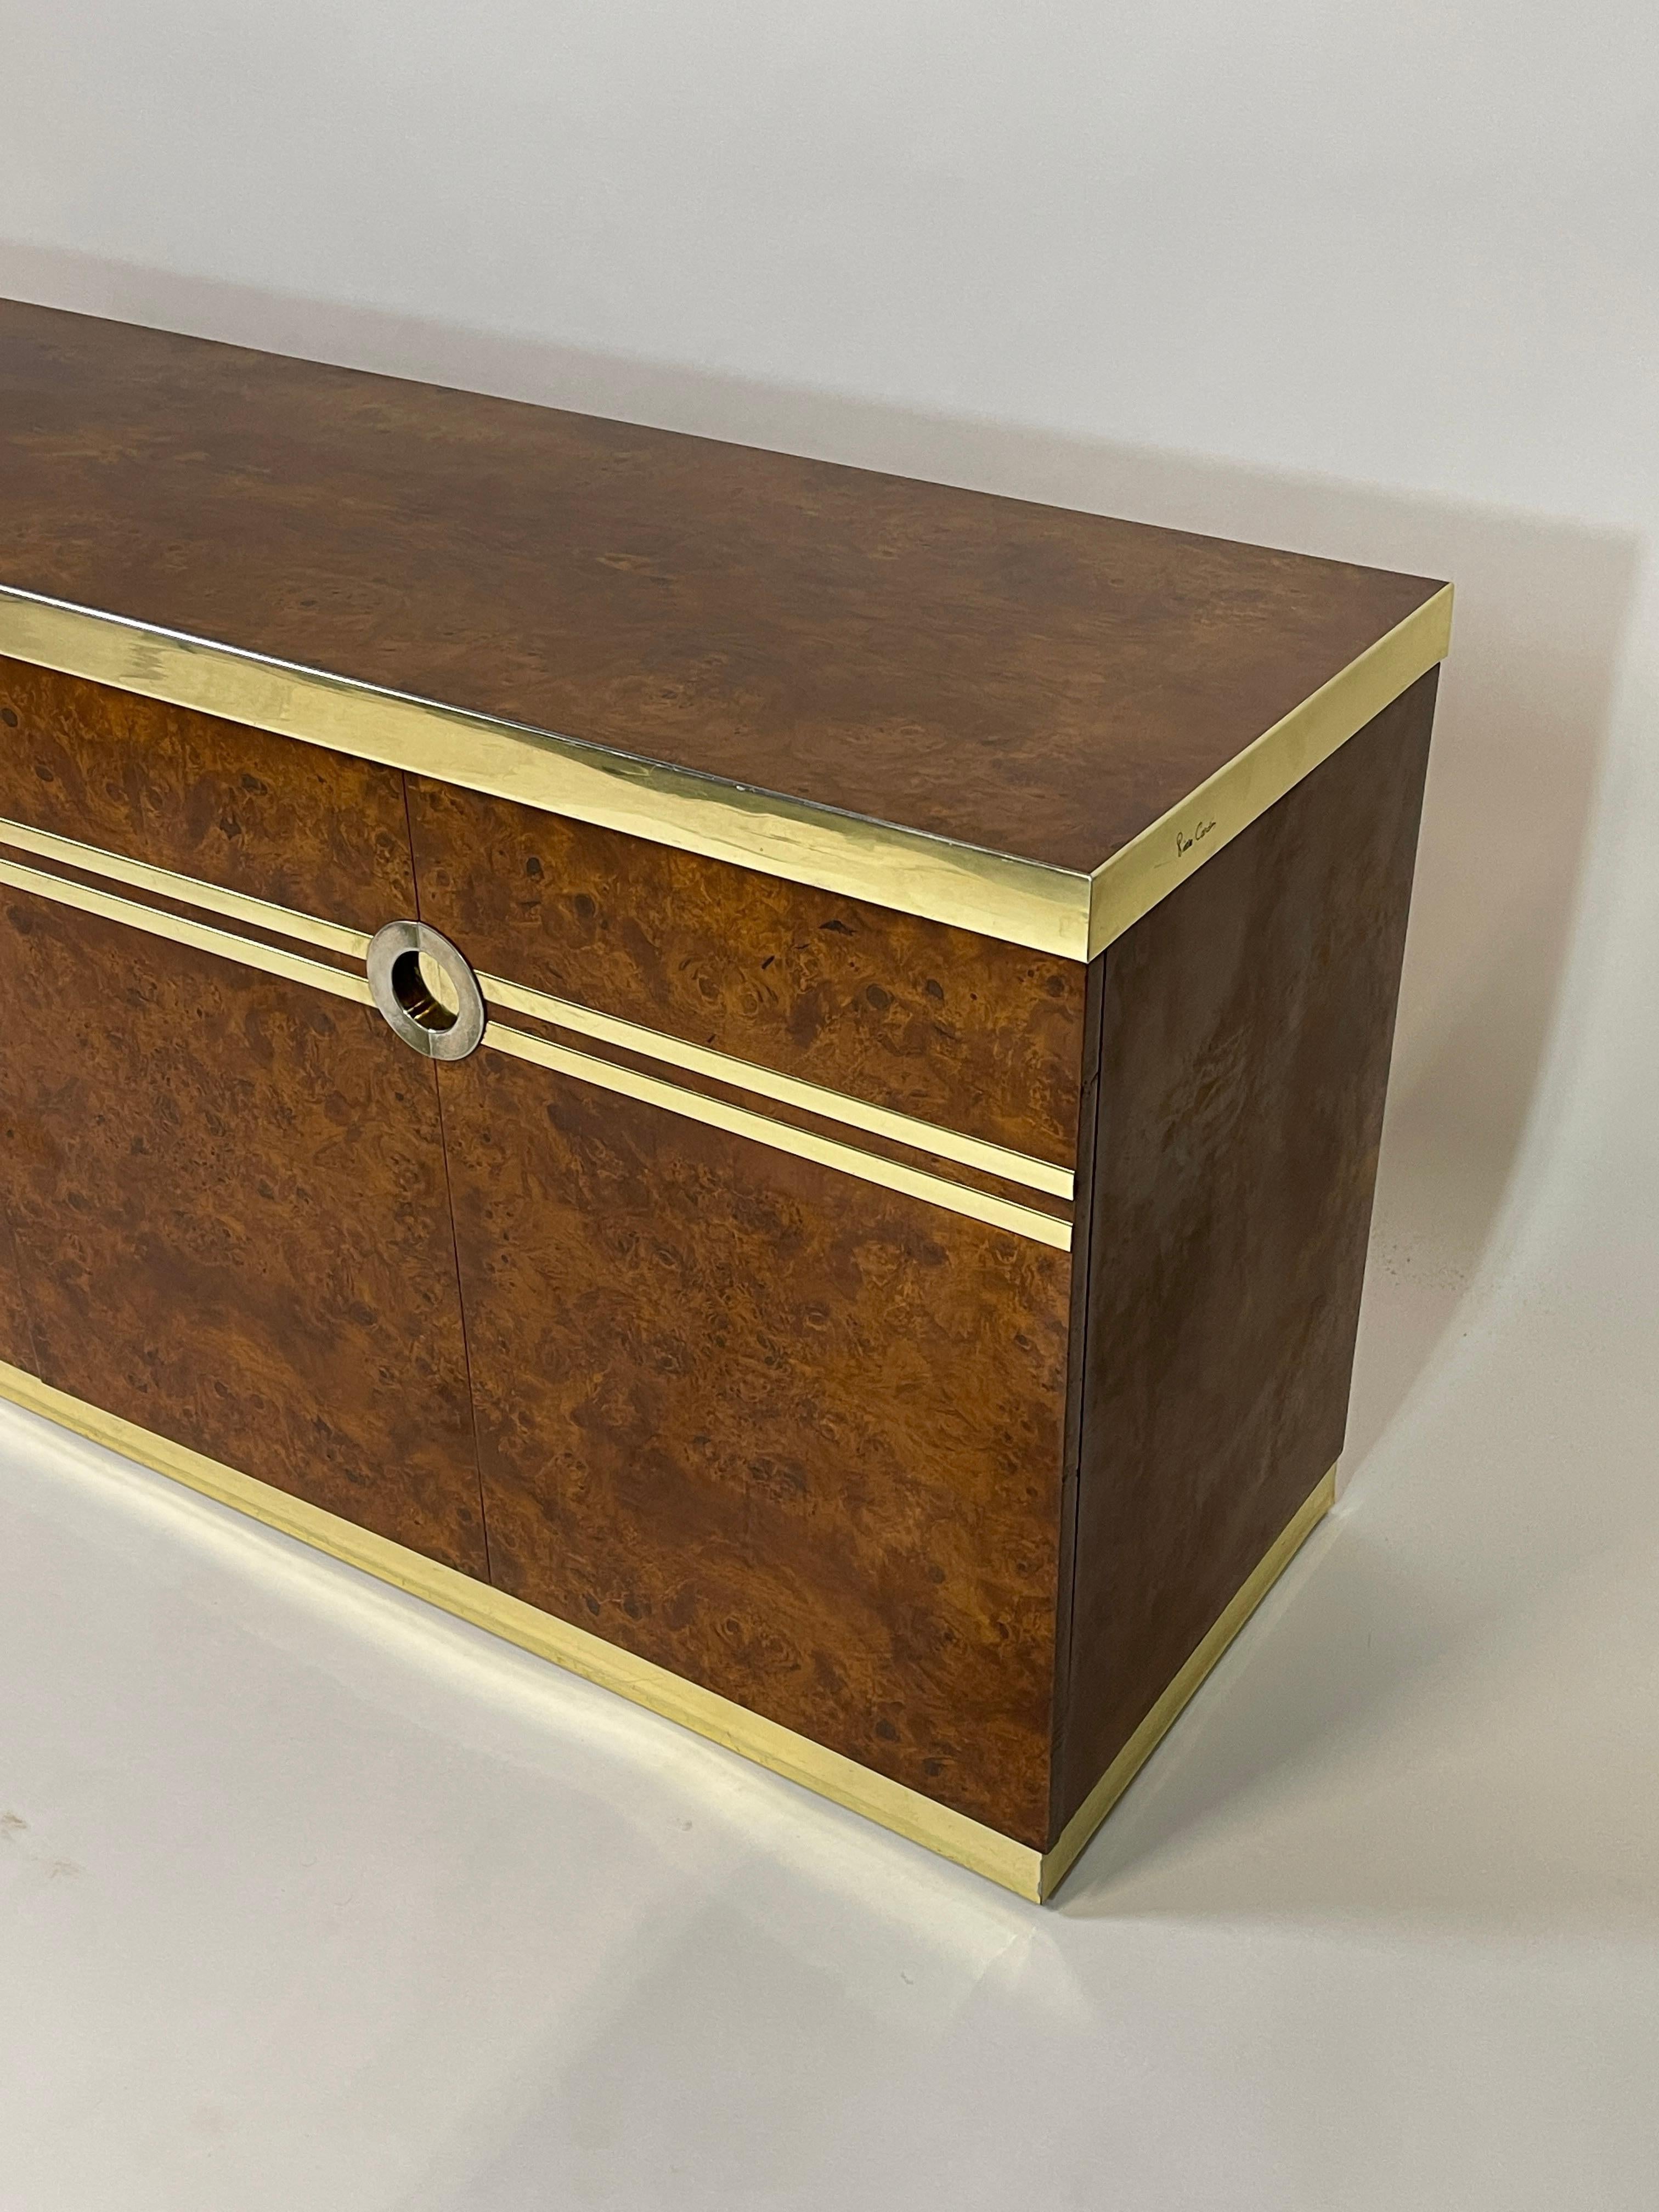 Elegant Glam Pierre Cardin Burled Olive Credenza Case Piece with Brass Detail 1